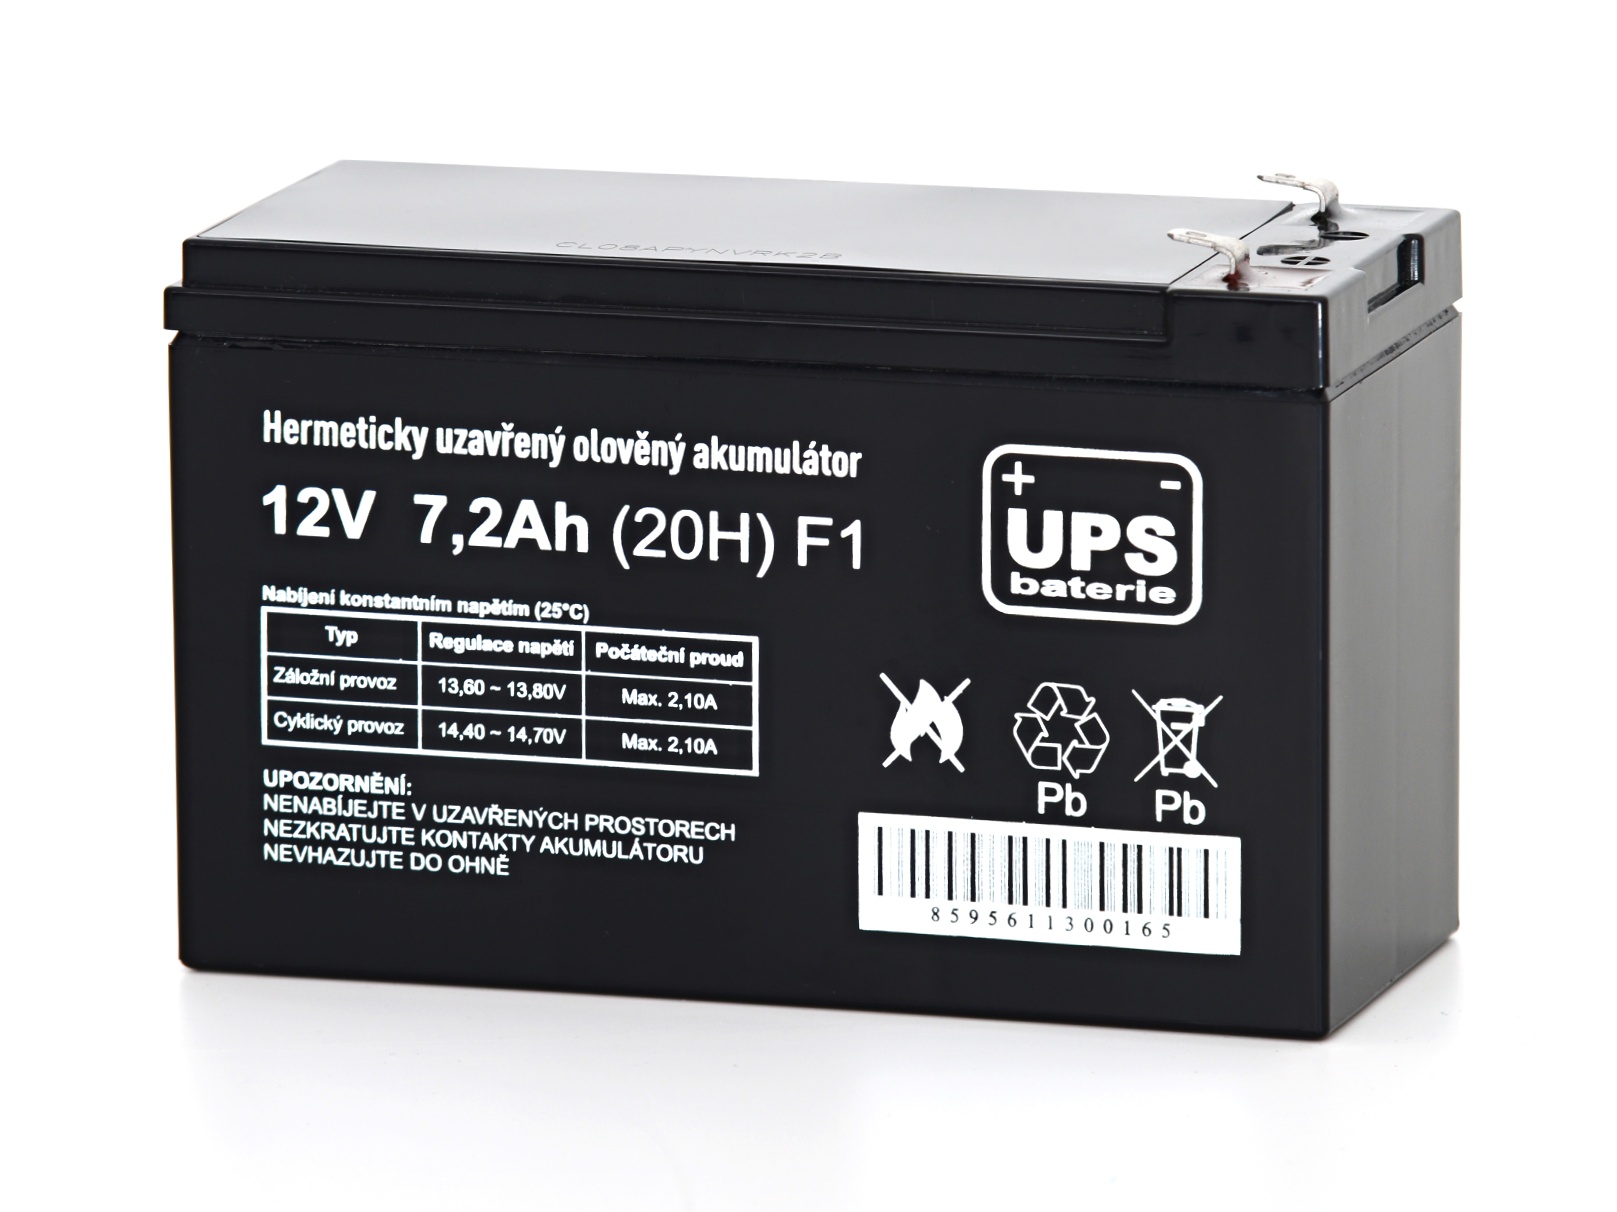 Obrázek UPS baterie 12V 7,2Ah F1